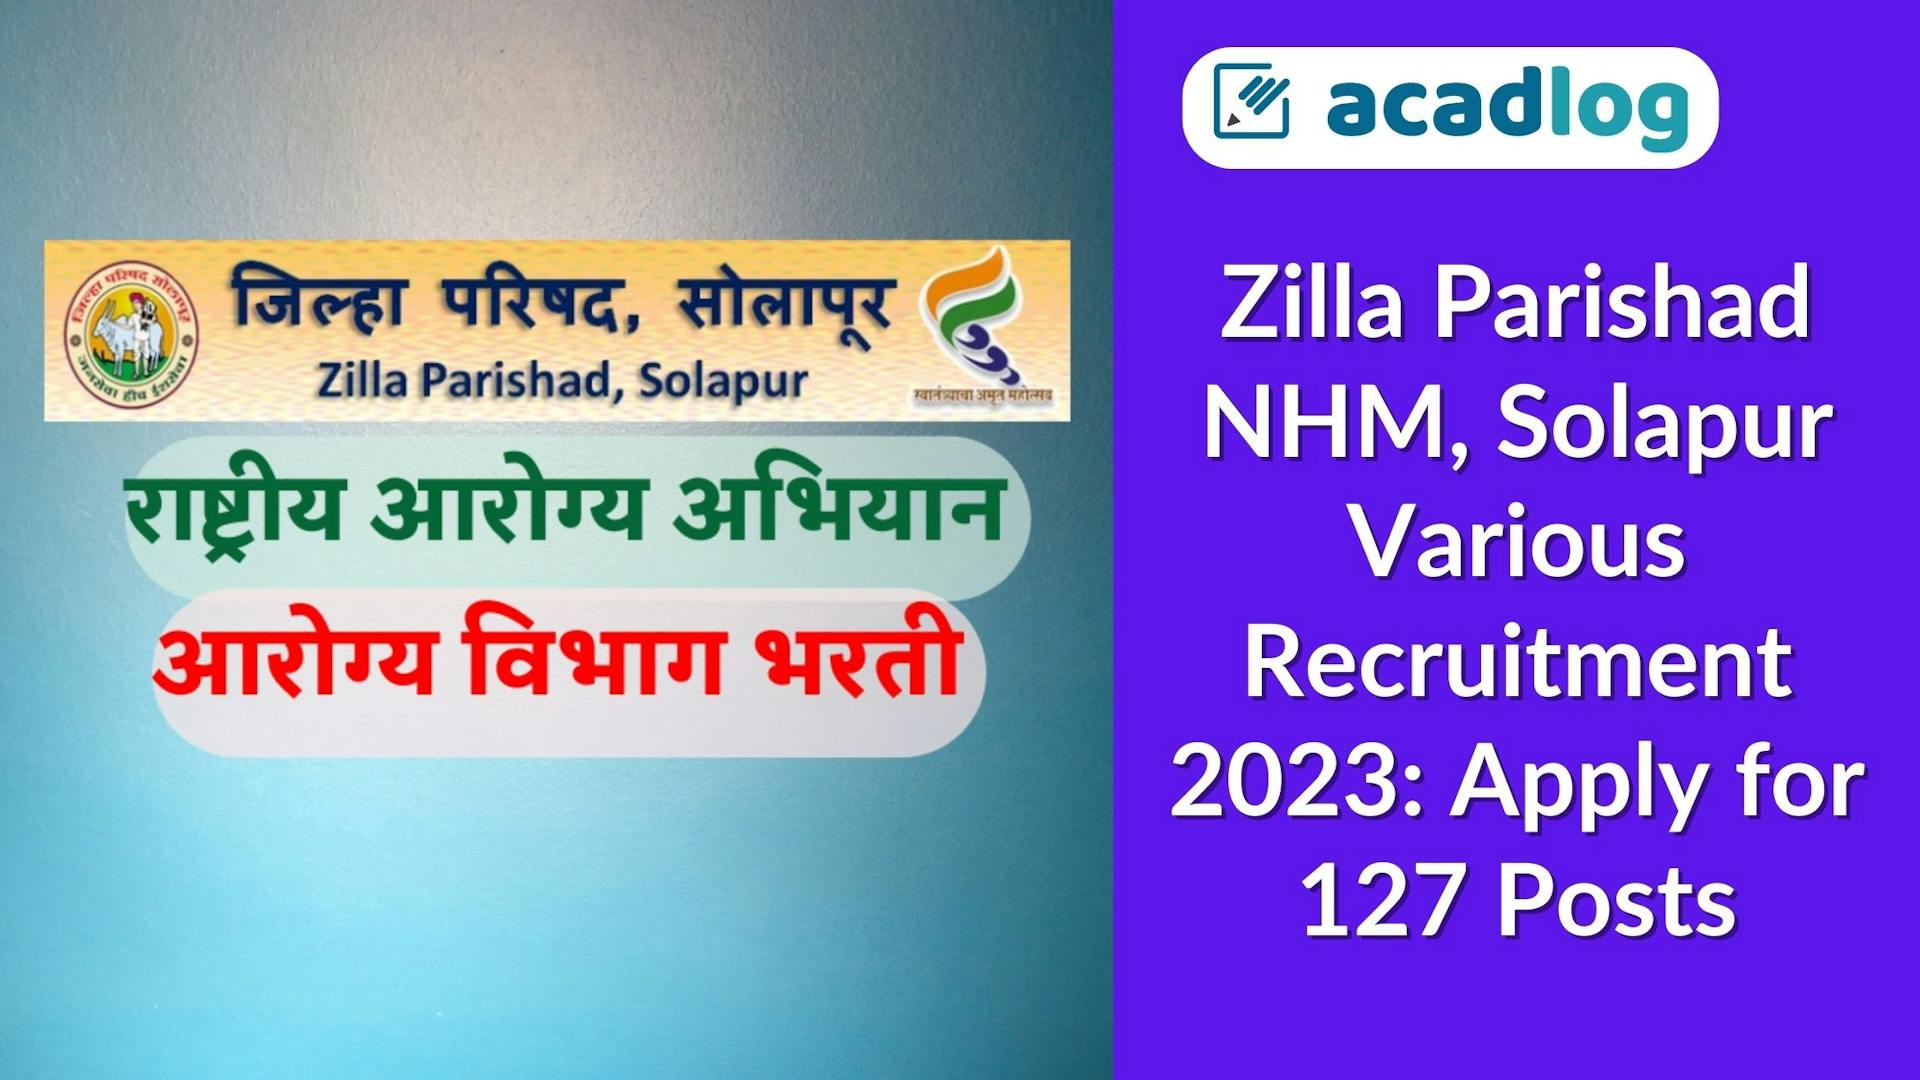 Zilla Parishad NHM, Solapur Various Recruitment 2023: Apply for 127 Posts